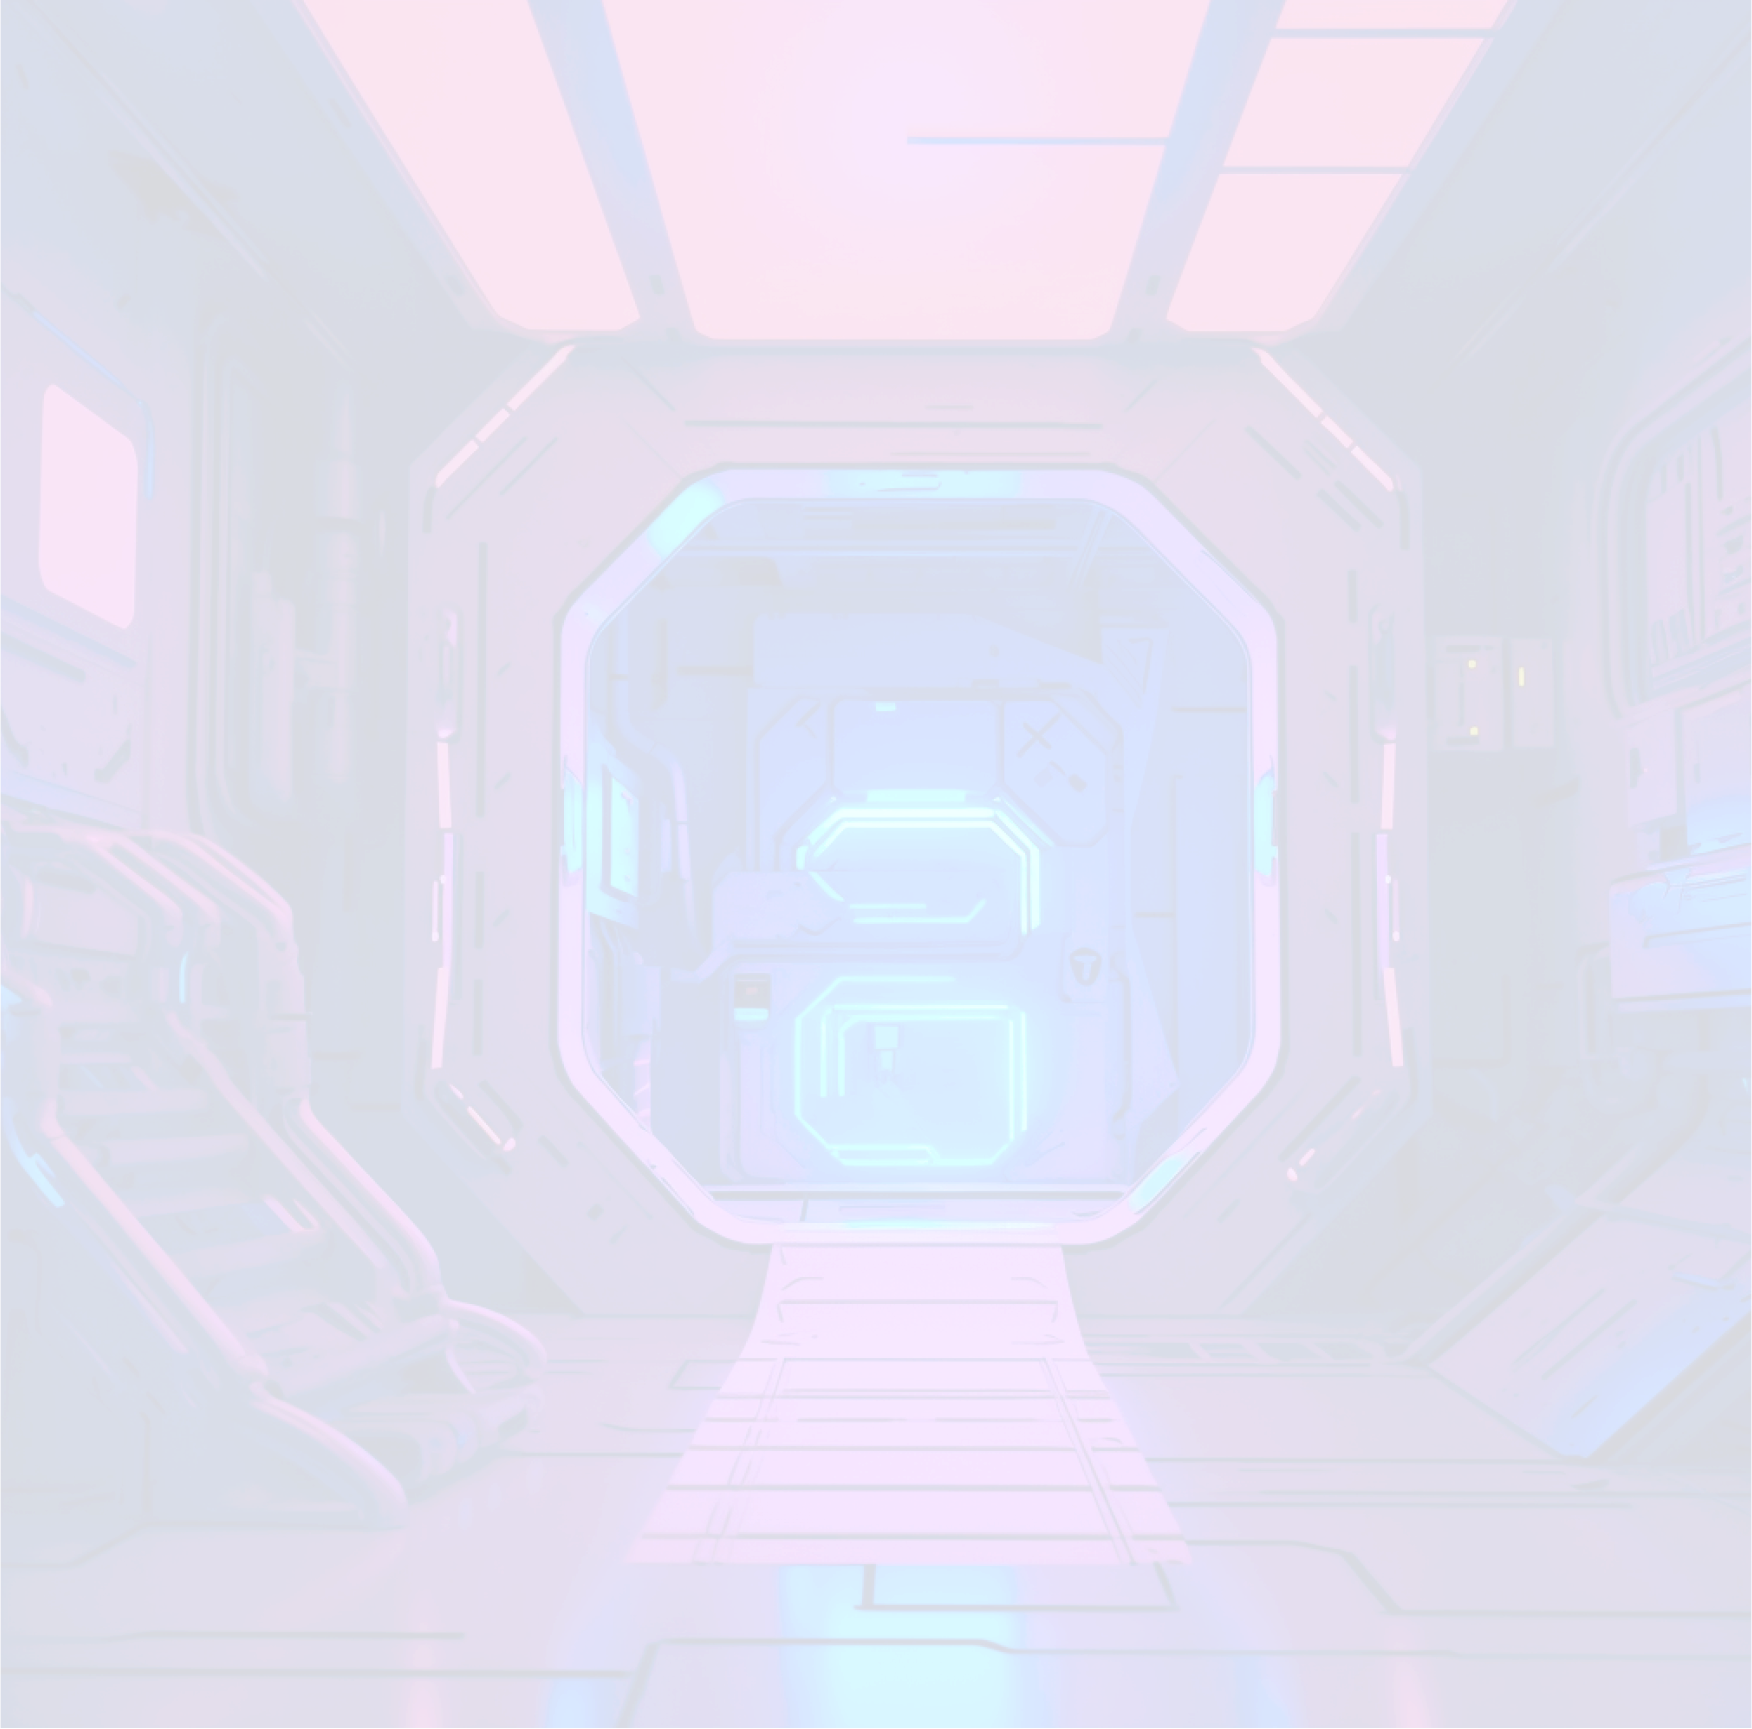 A cooridor and door of a spaceship